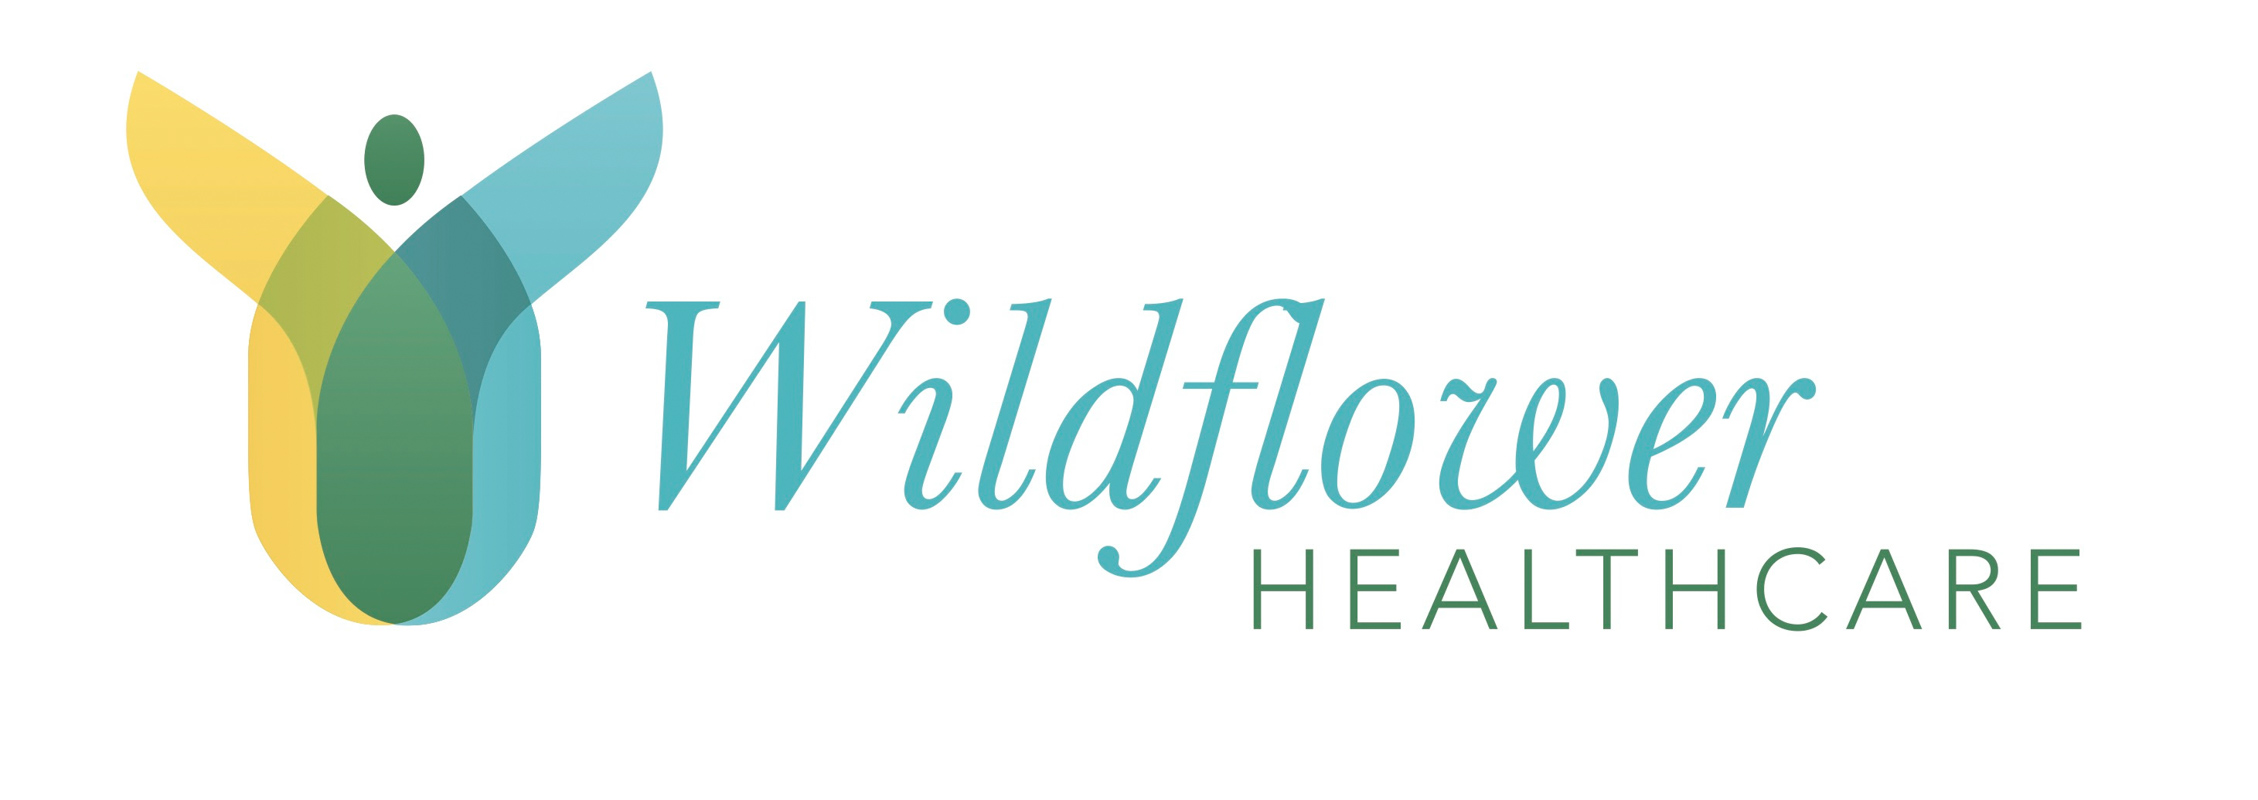 Wildflower Healthcare logo